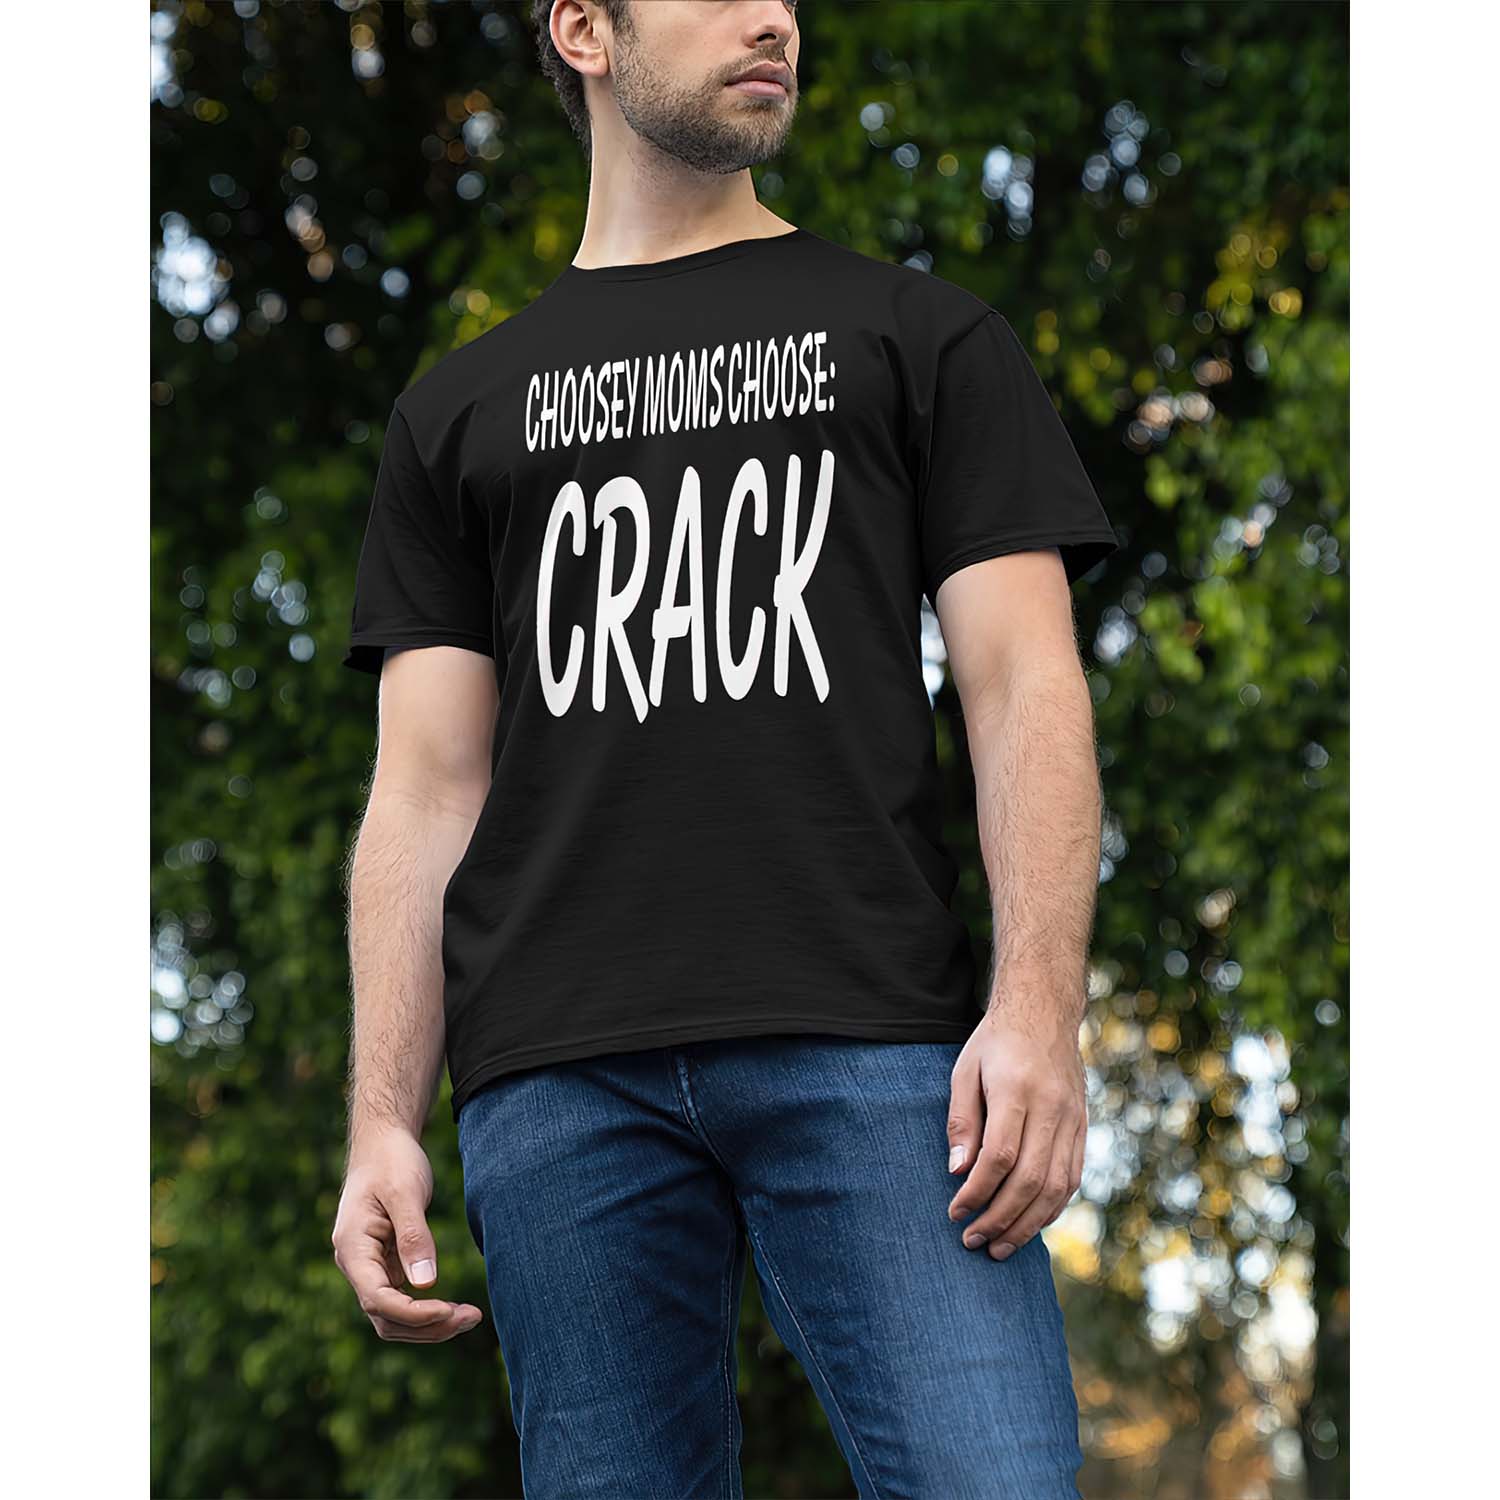 Choosey Moms Choose Crack Shirt